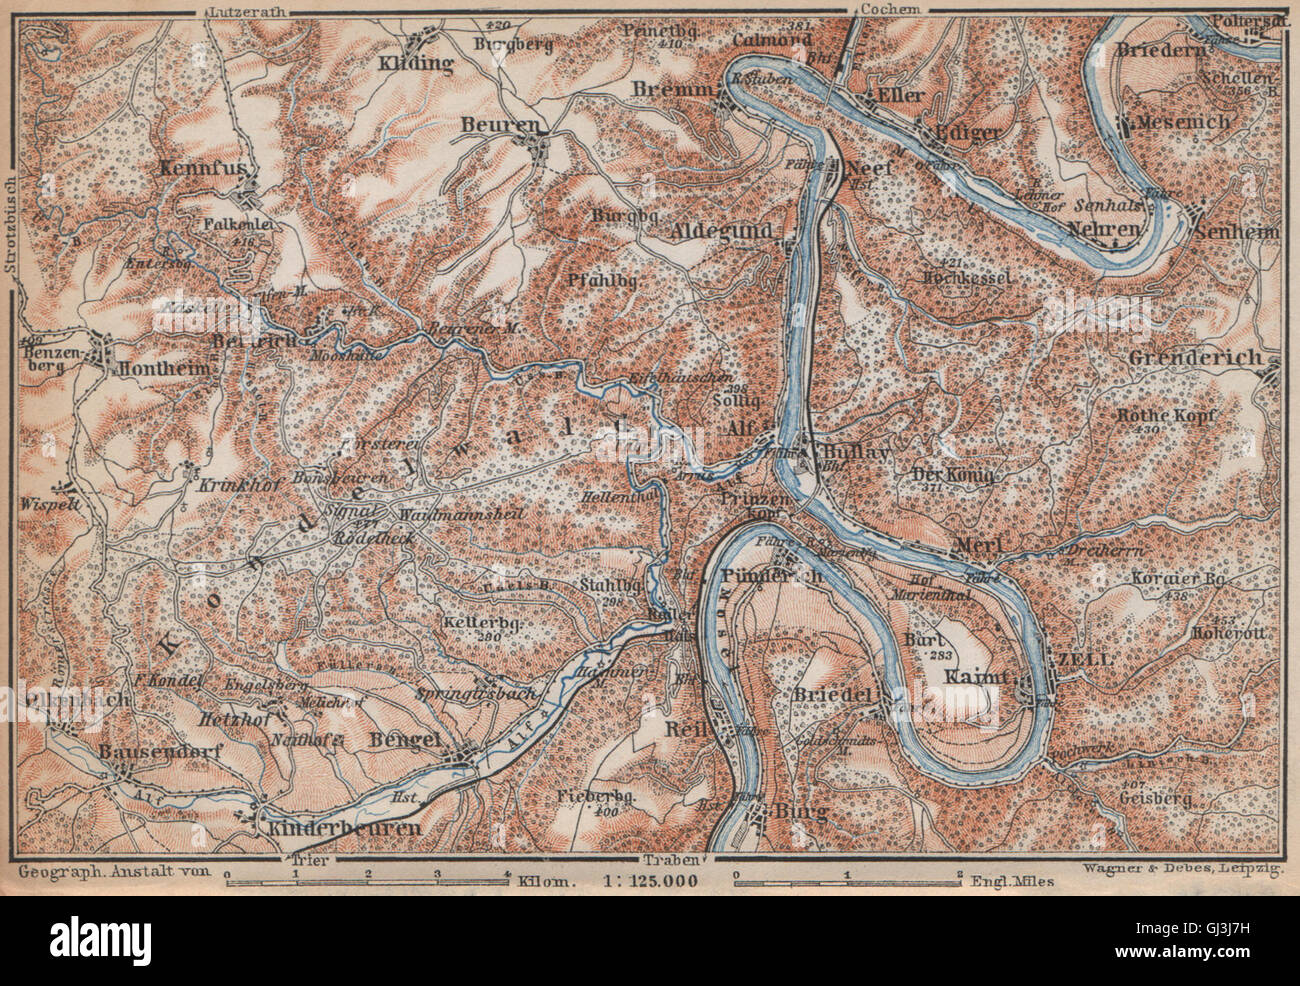 MOSEL. Zeller Hamm. Alf Kondelwald Moselle Eifel. Rhineland-Palatinate, 1896 map Stock Photo